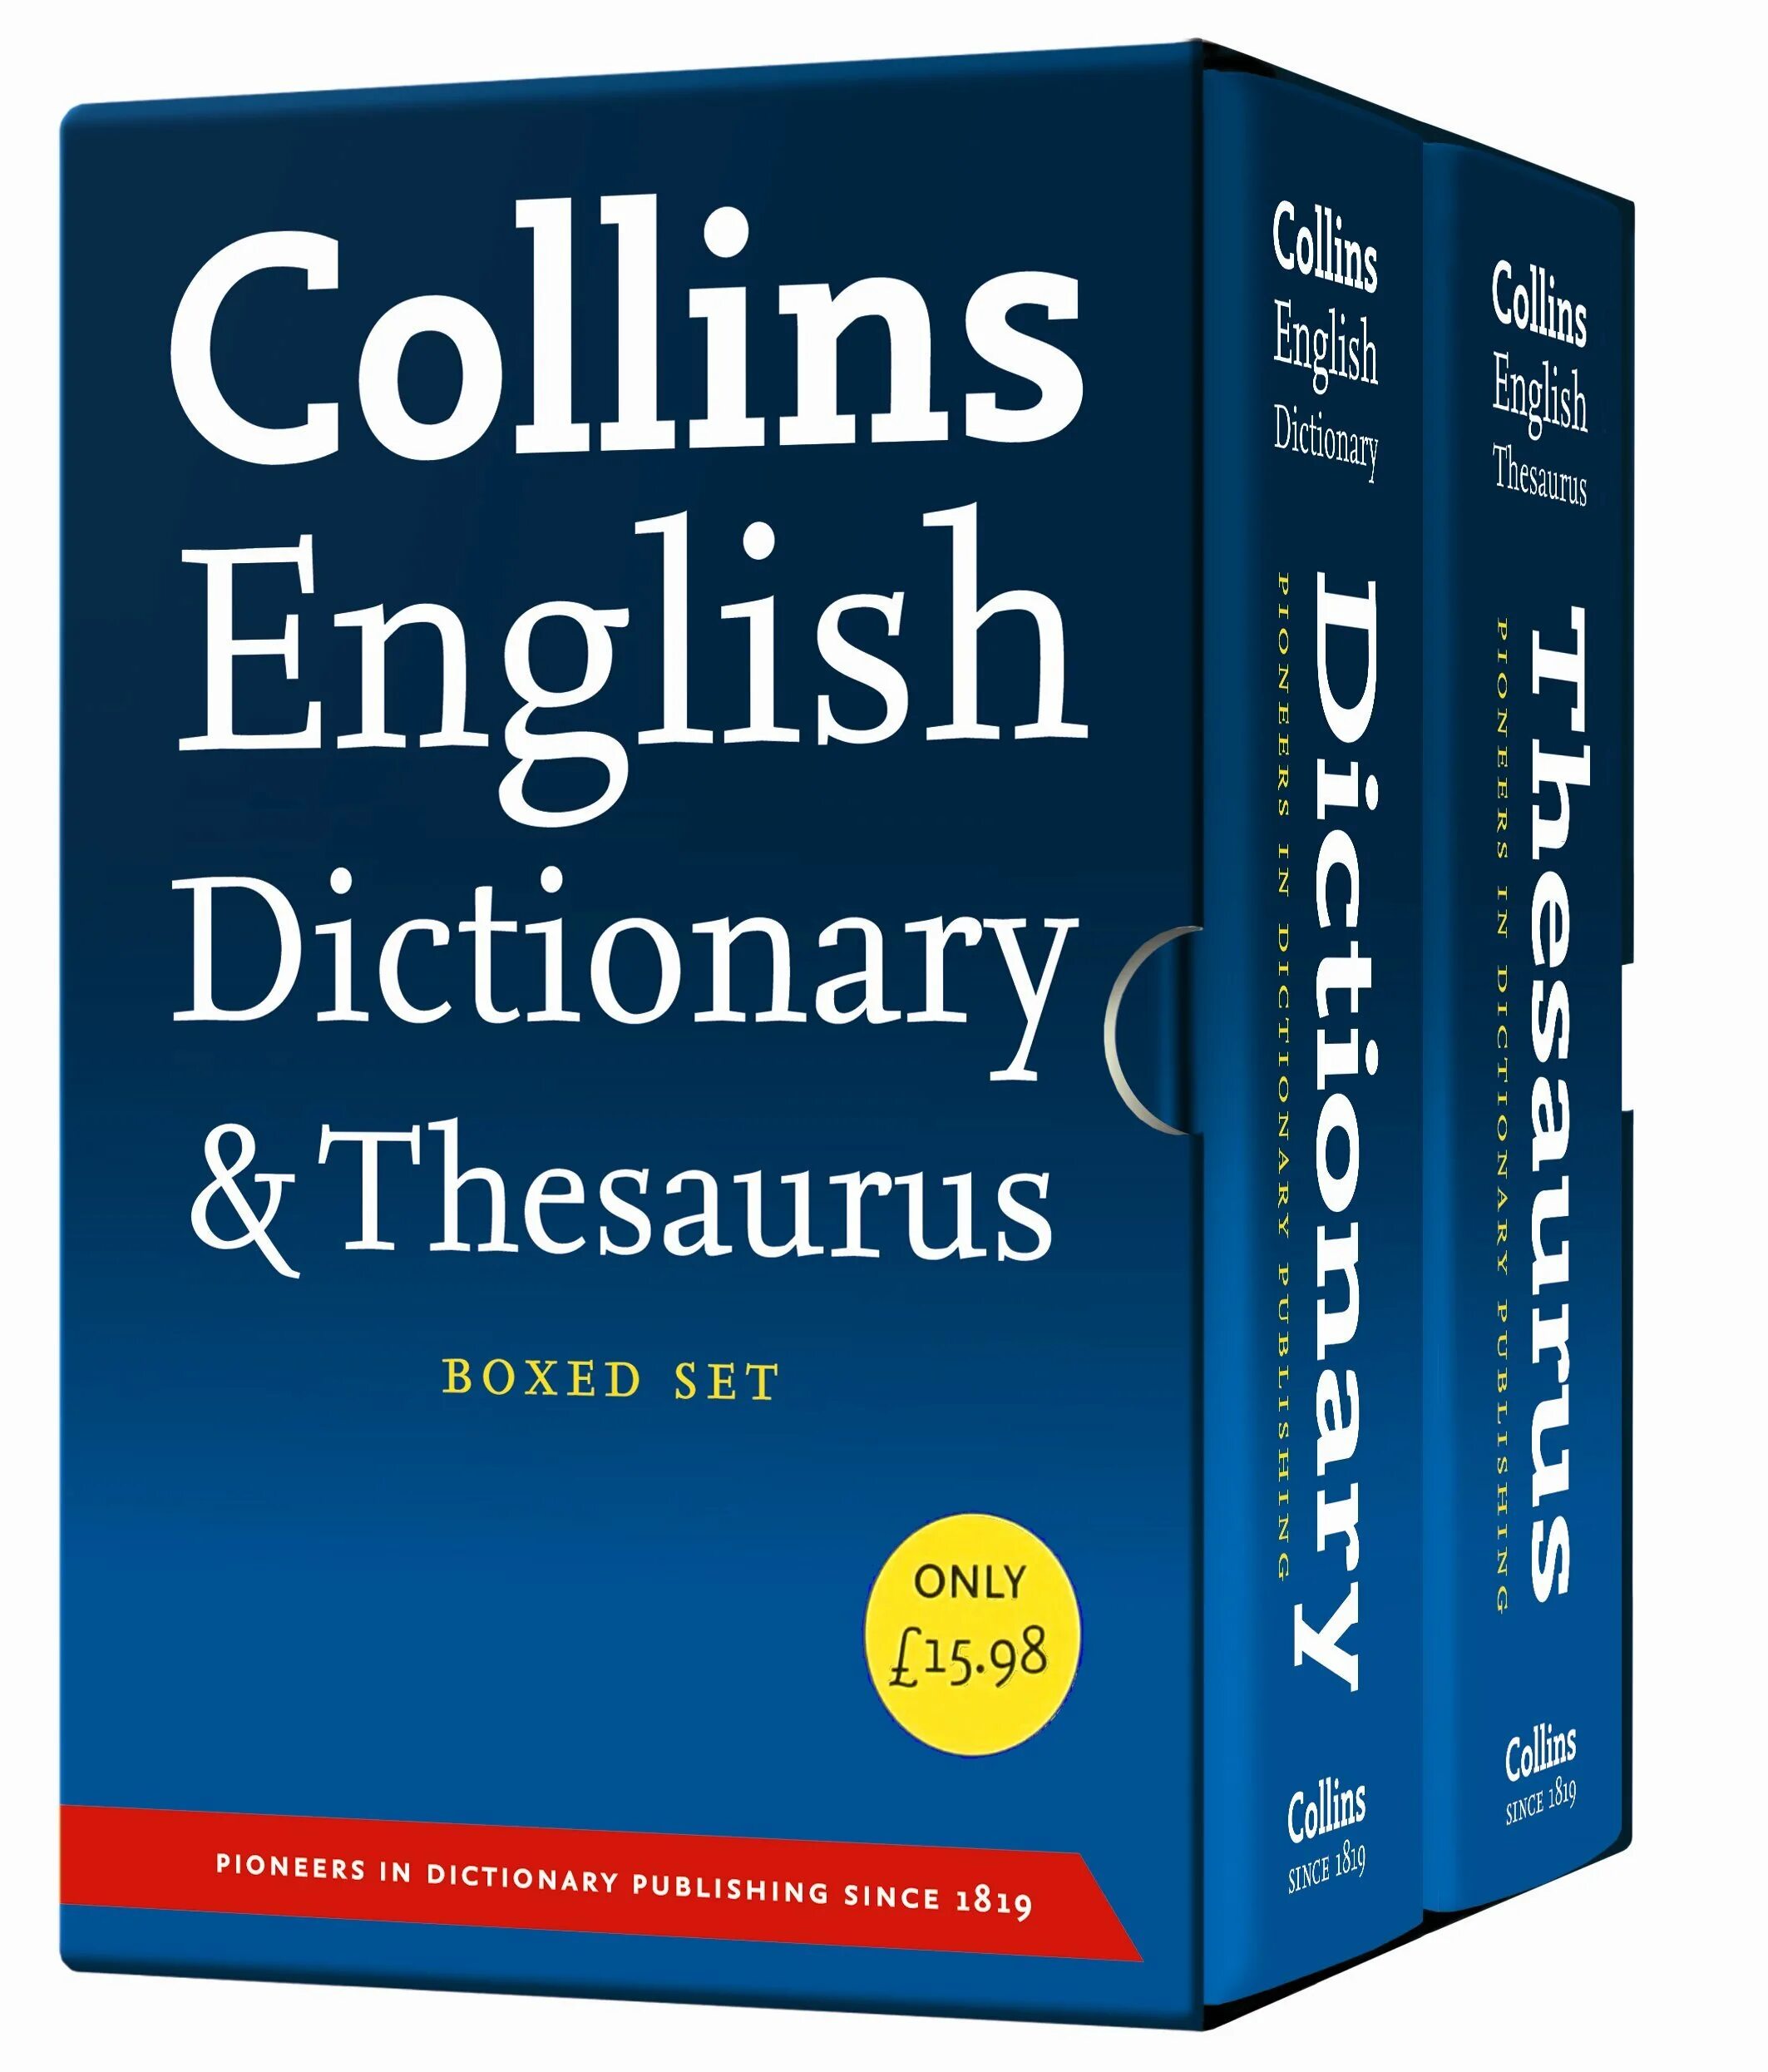 Словарь Collins. Collins English Dictionary. Коллинз ДИКШИНАРИ. Collins Thesaurus. Two dictionary